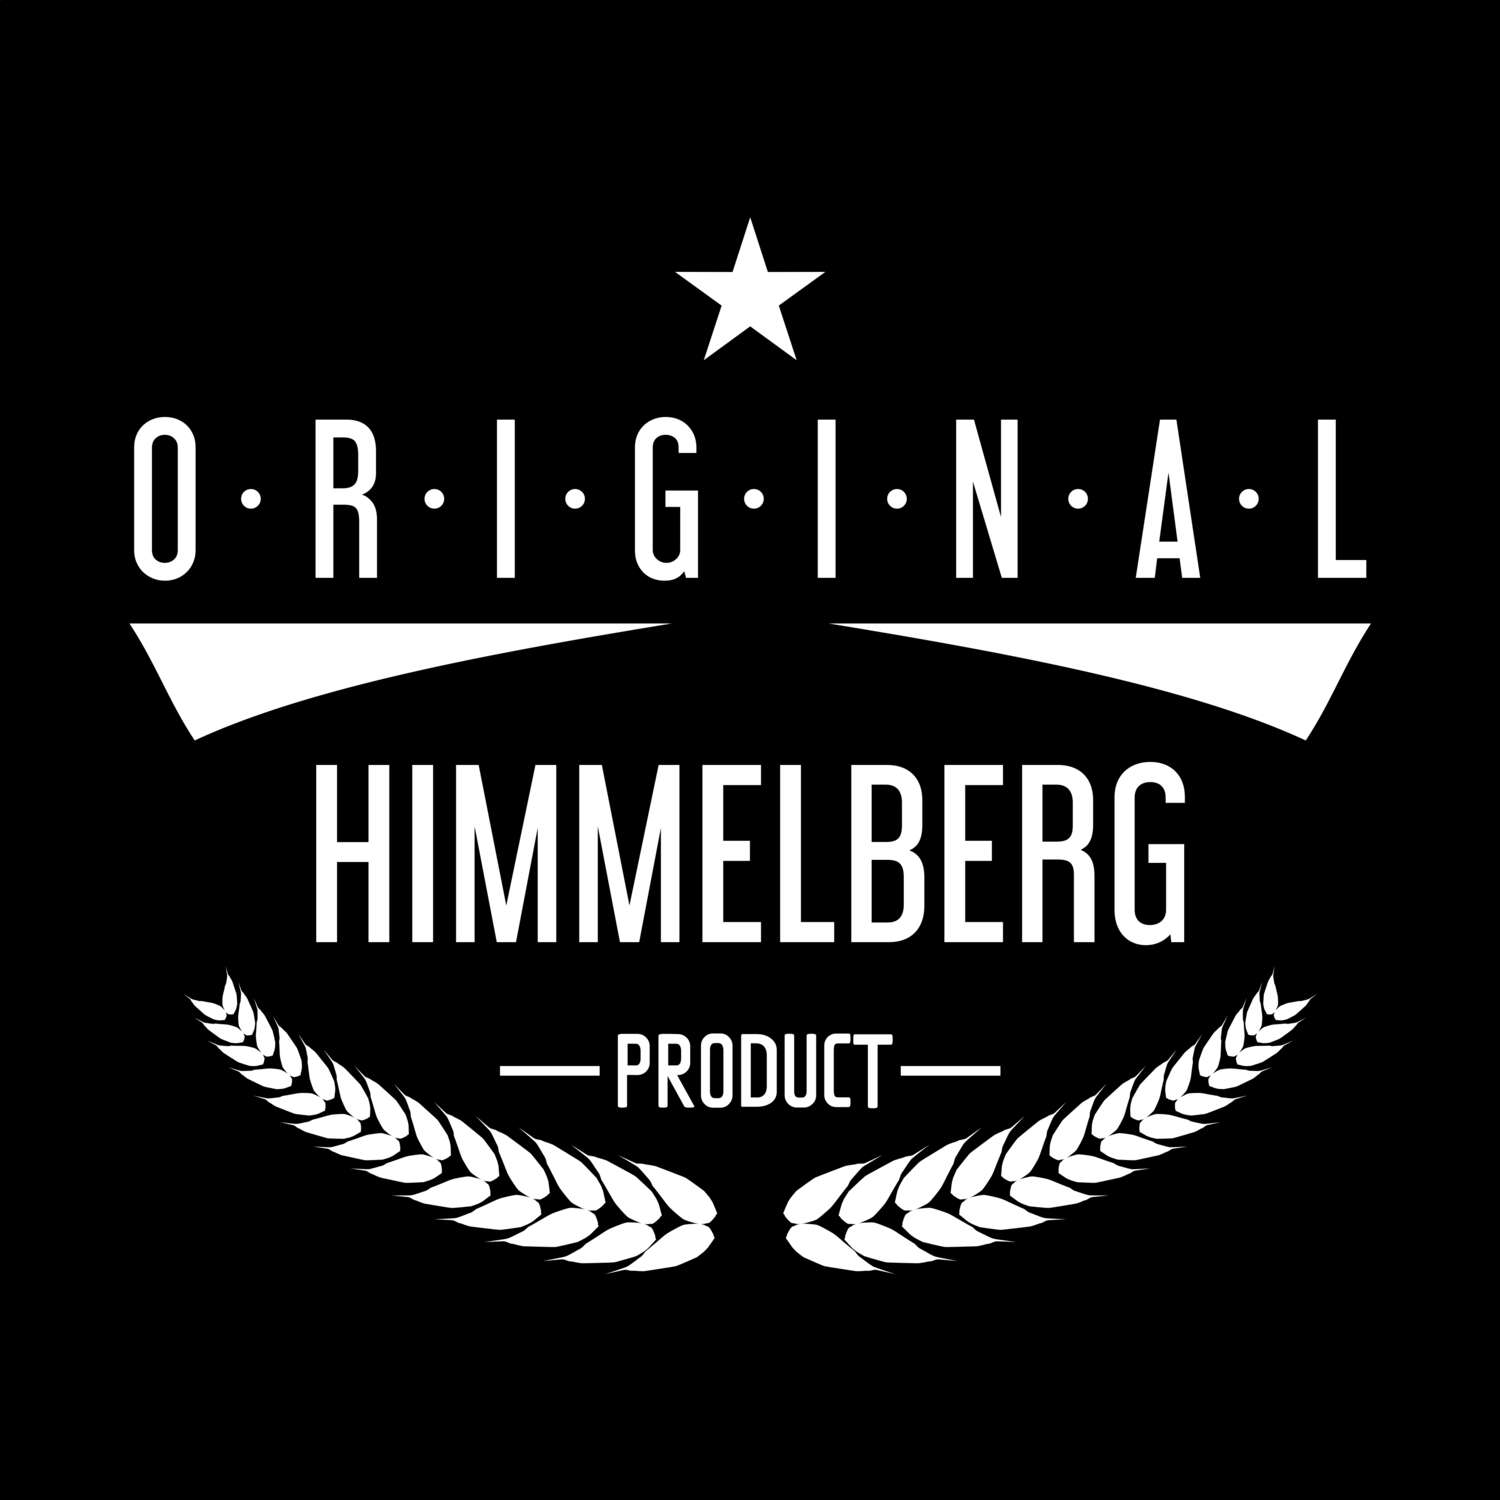 Himmelberg T-Shirt »Original Product«